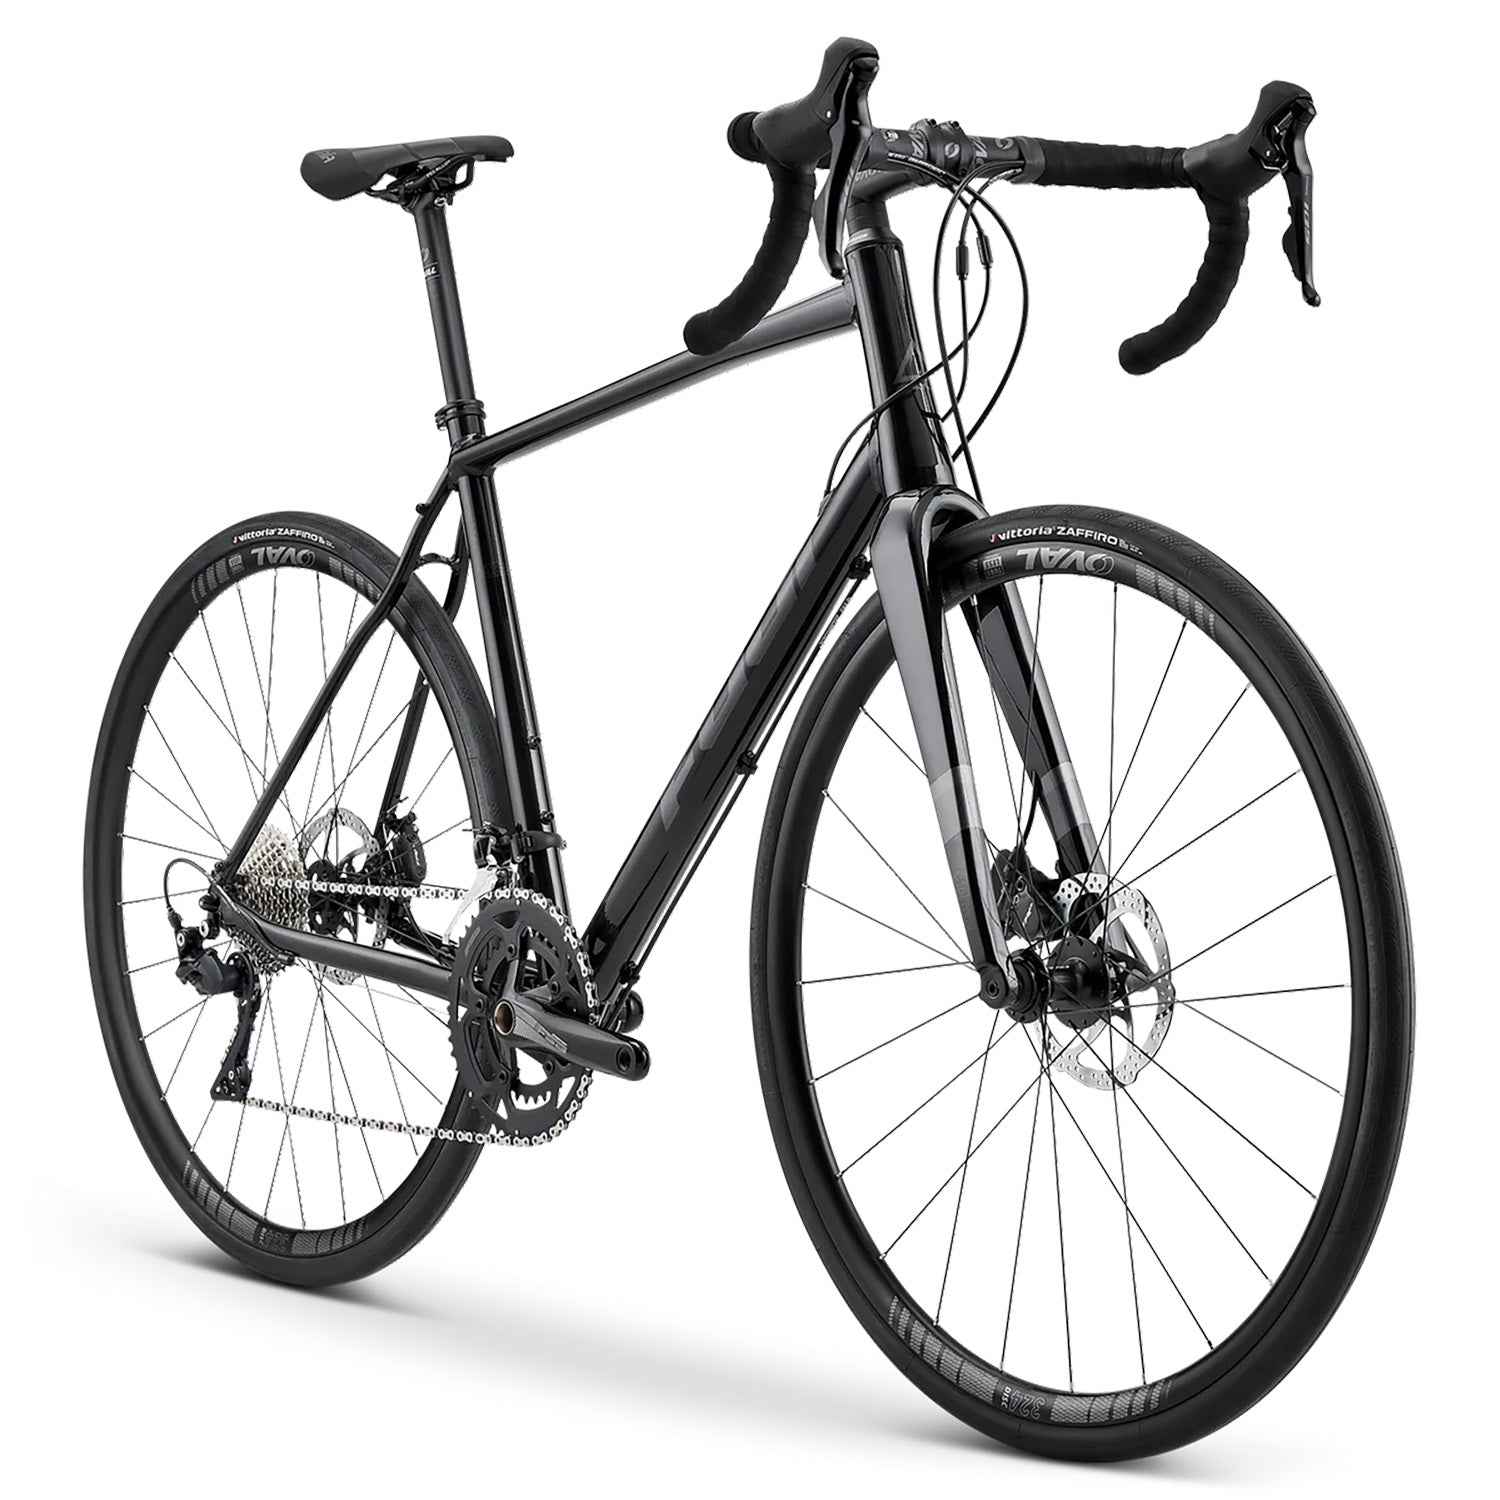 Fuji Sportif 1.1 - 46cm, Pearl Black/Charcoal, front view, Bixby Bicycles, Oklahoma